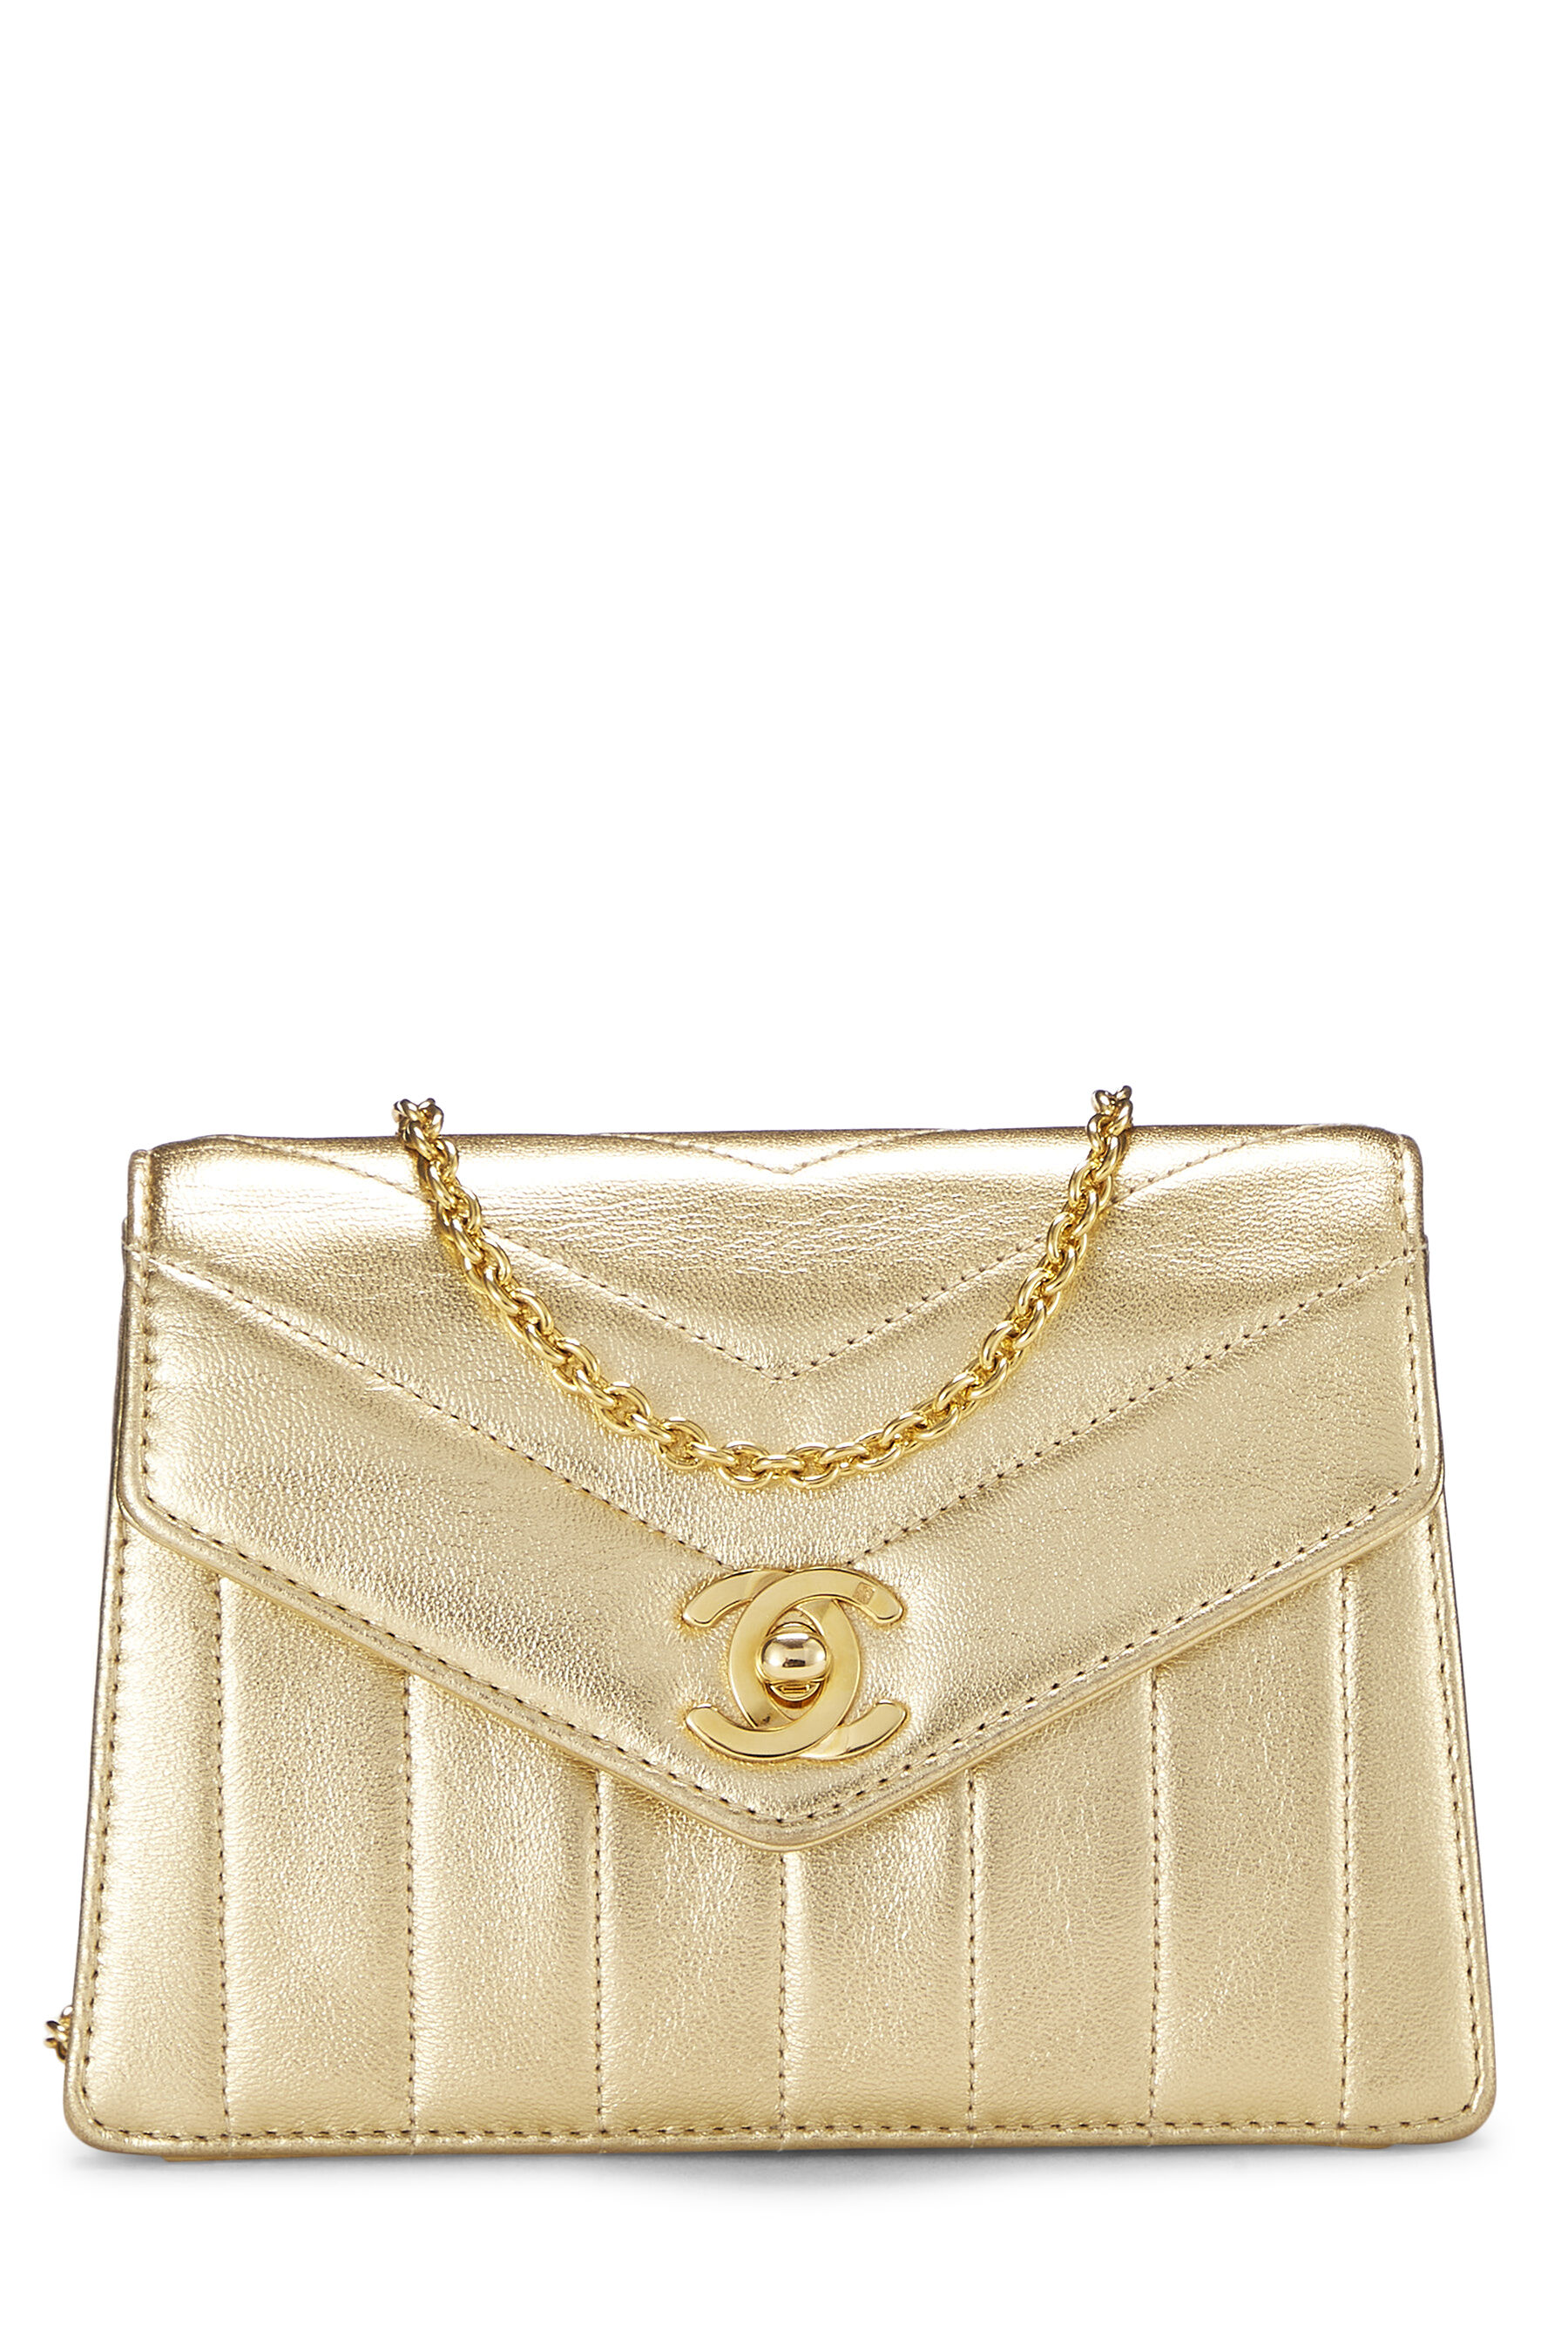 Chanel - Metallic Gold Chevron Lambskin Envelope Flap Mini